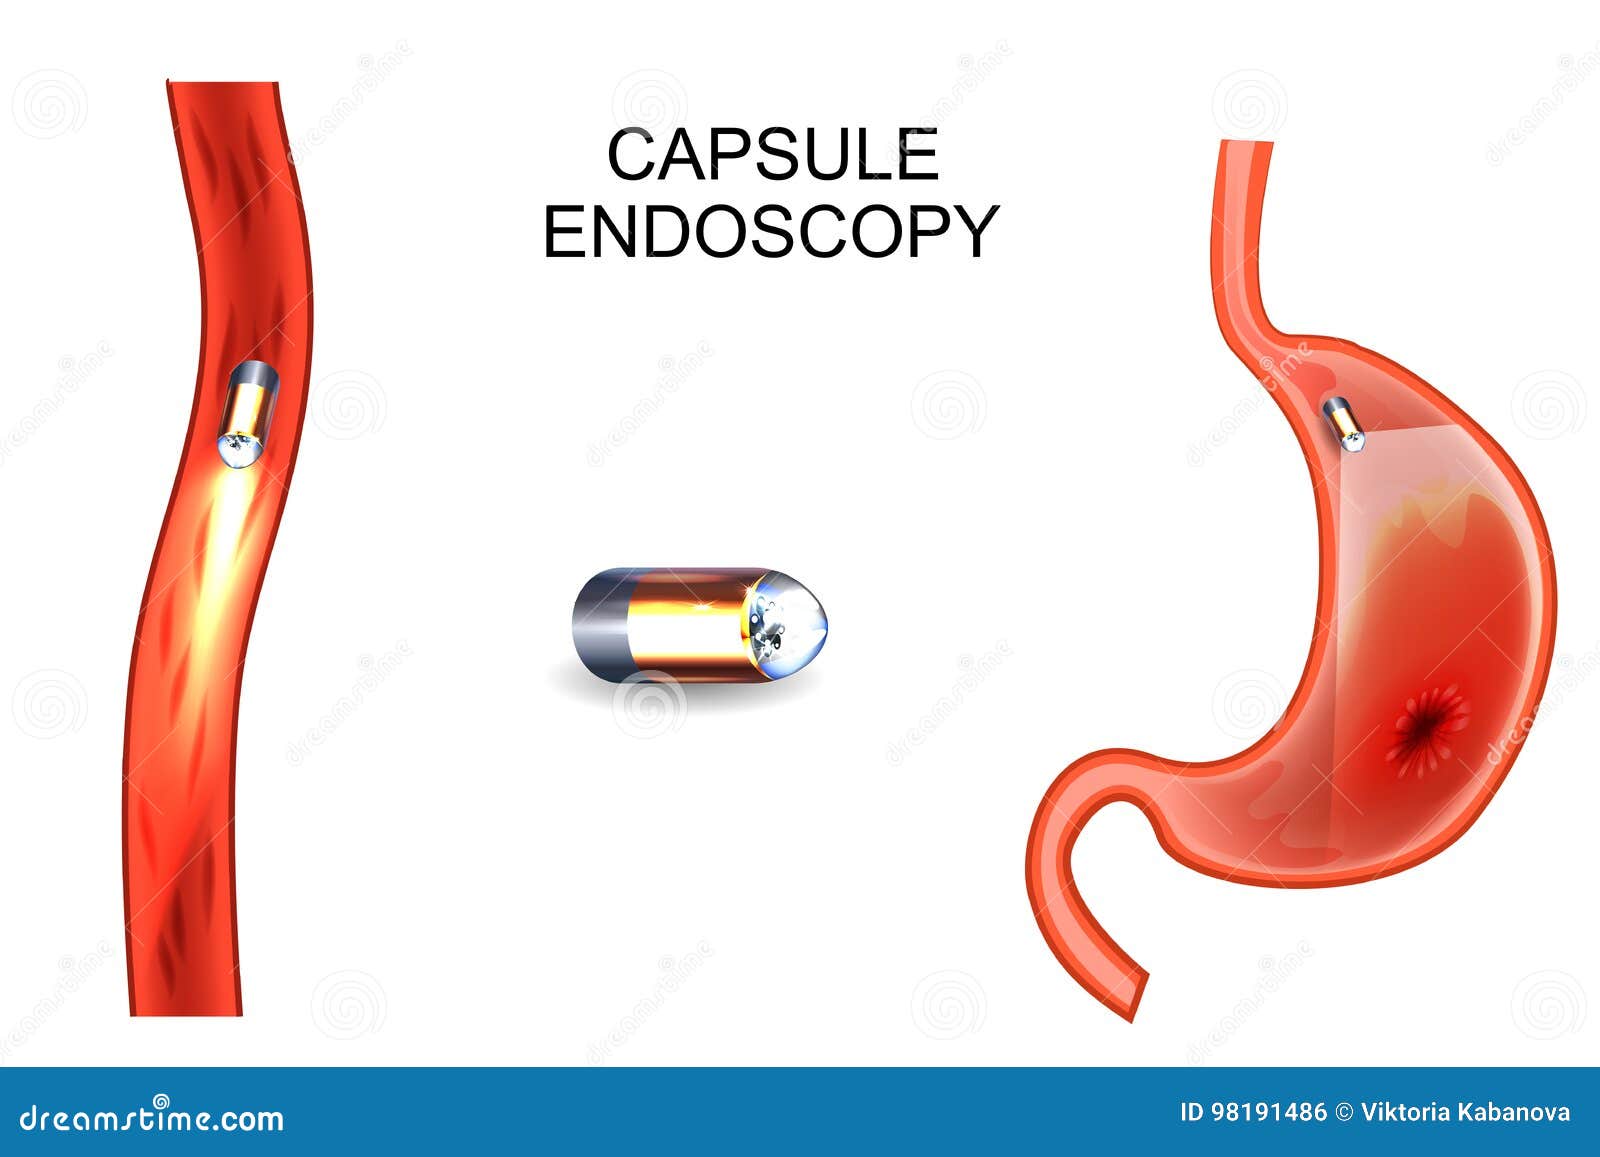 capsule endoscopy. egd, gastroenterology.